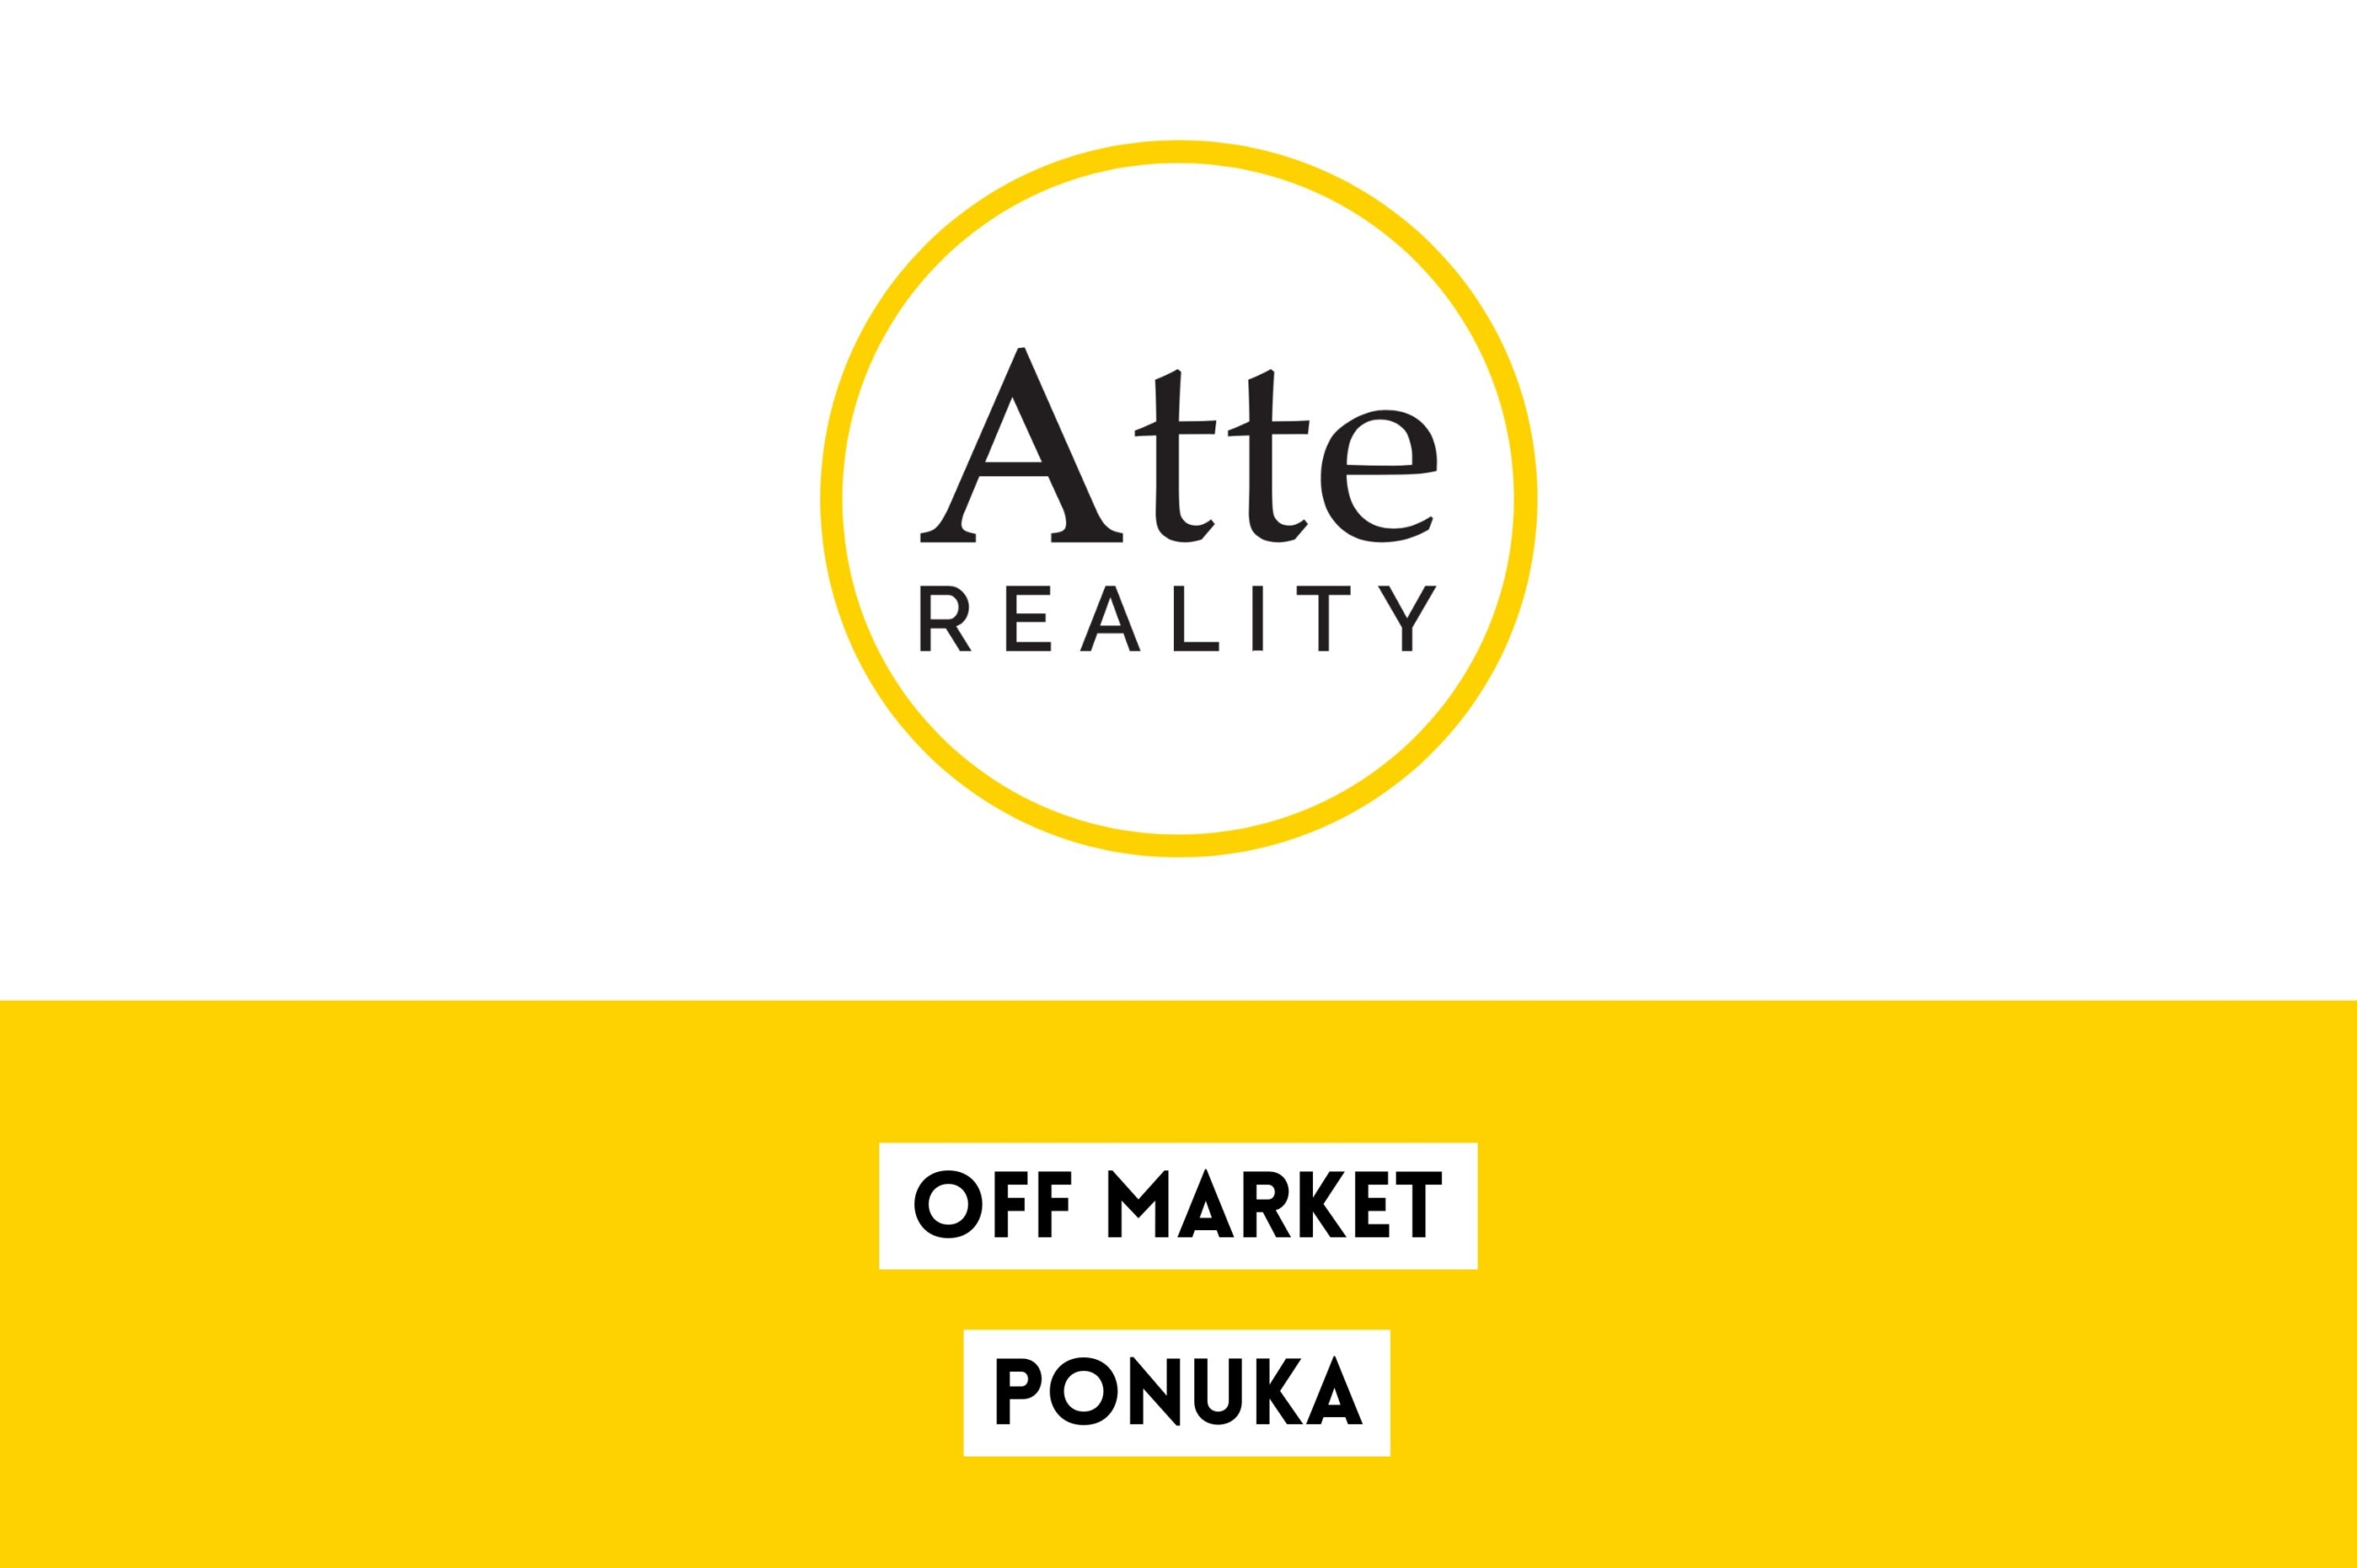 Atte REALITY Off Market ponuka